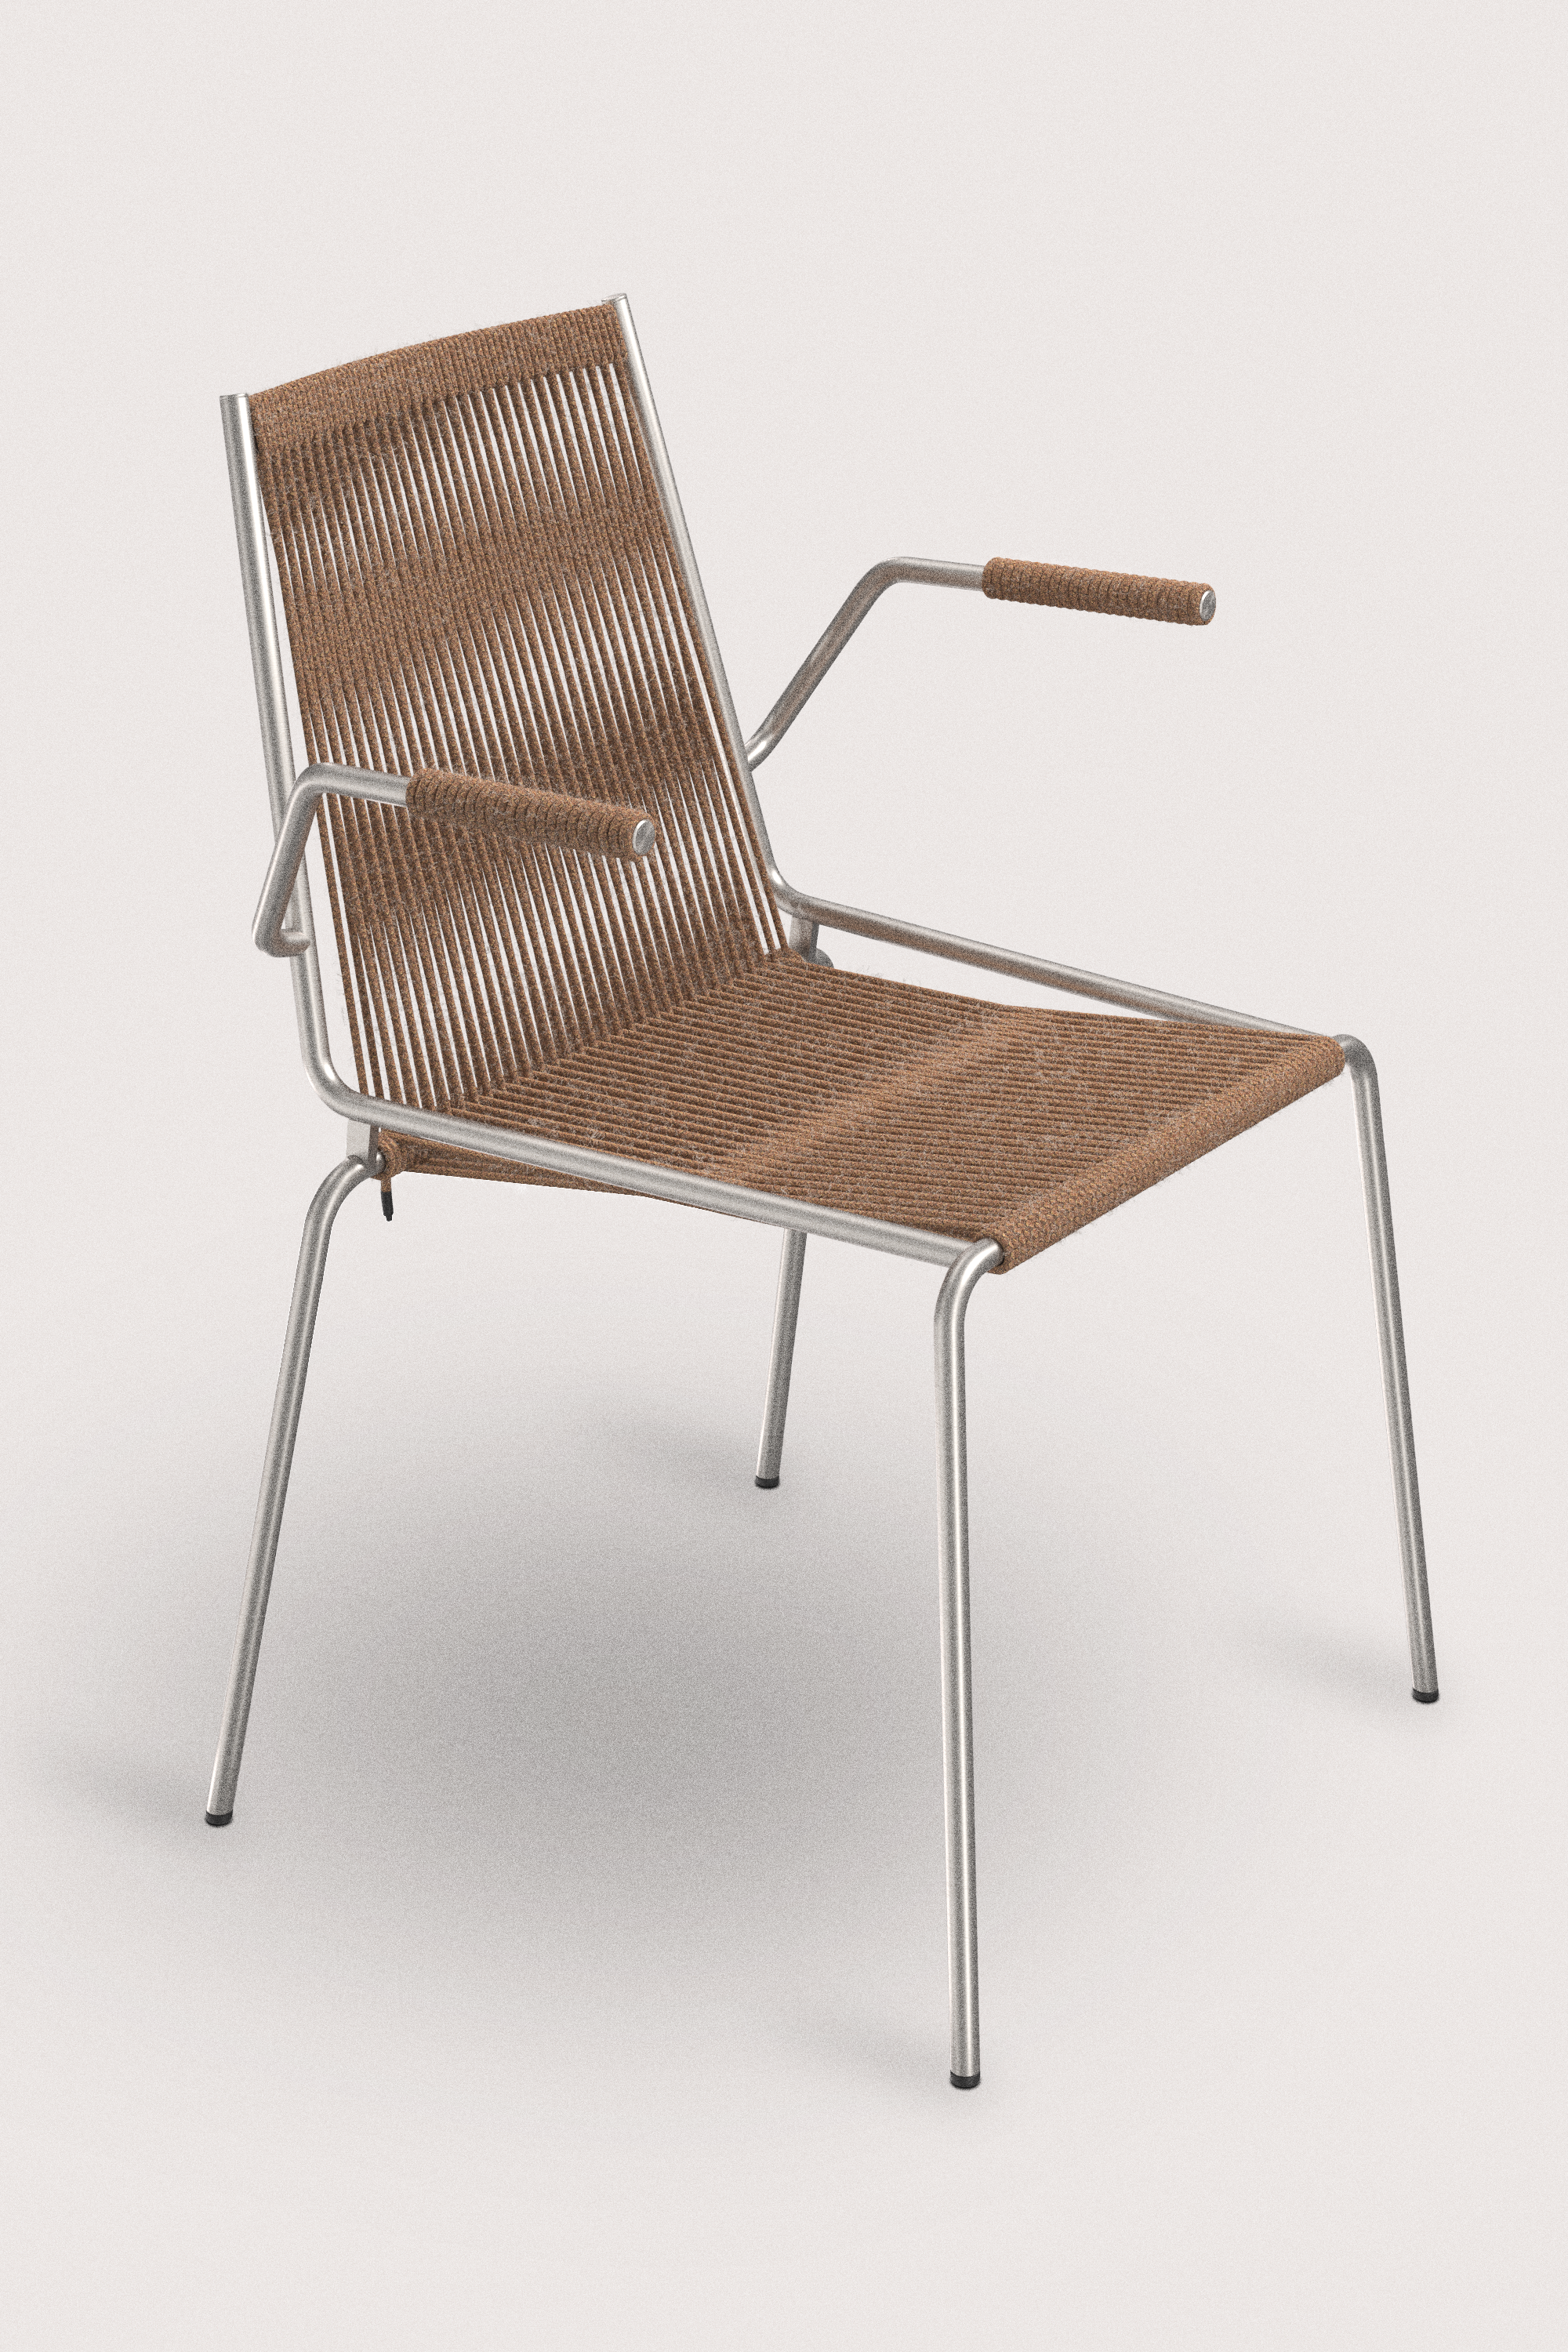 DW303_Noel Chair With Armrest_Steel_Wool Flag Halyard_Thorup Copenhagen.png